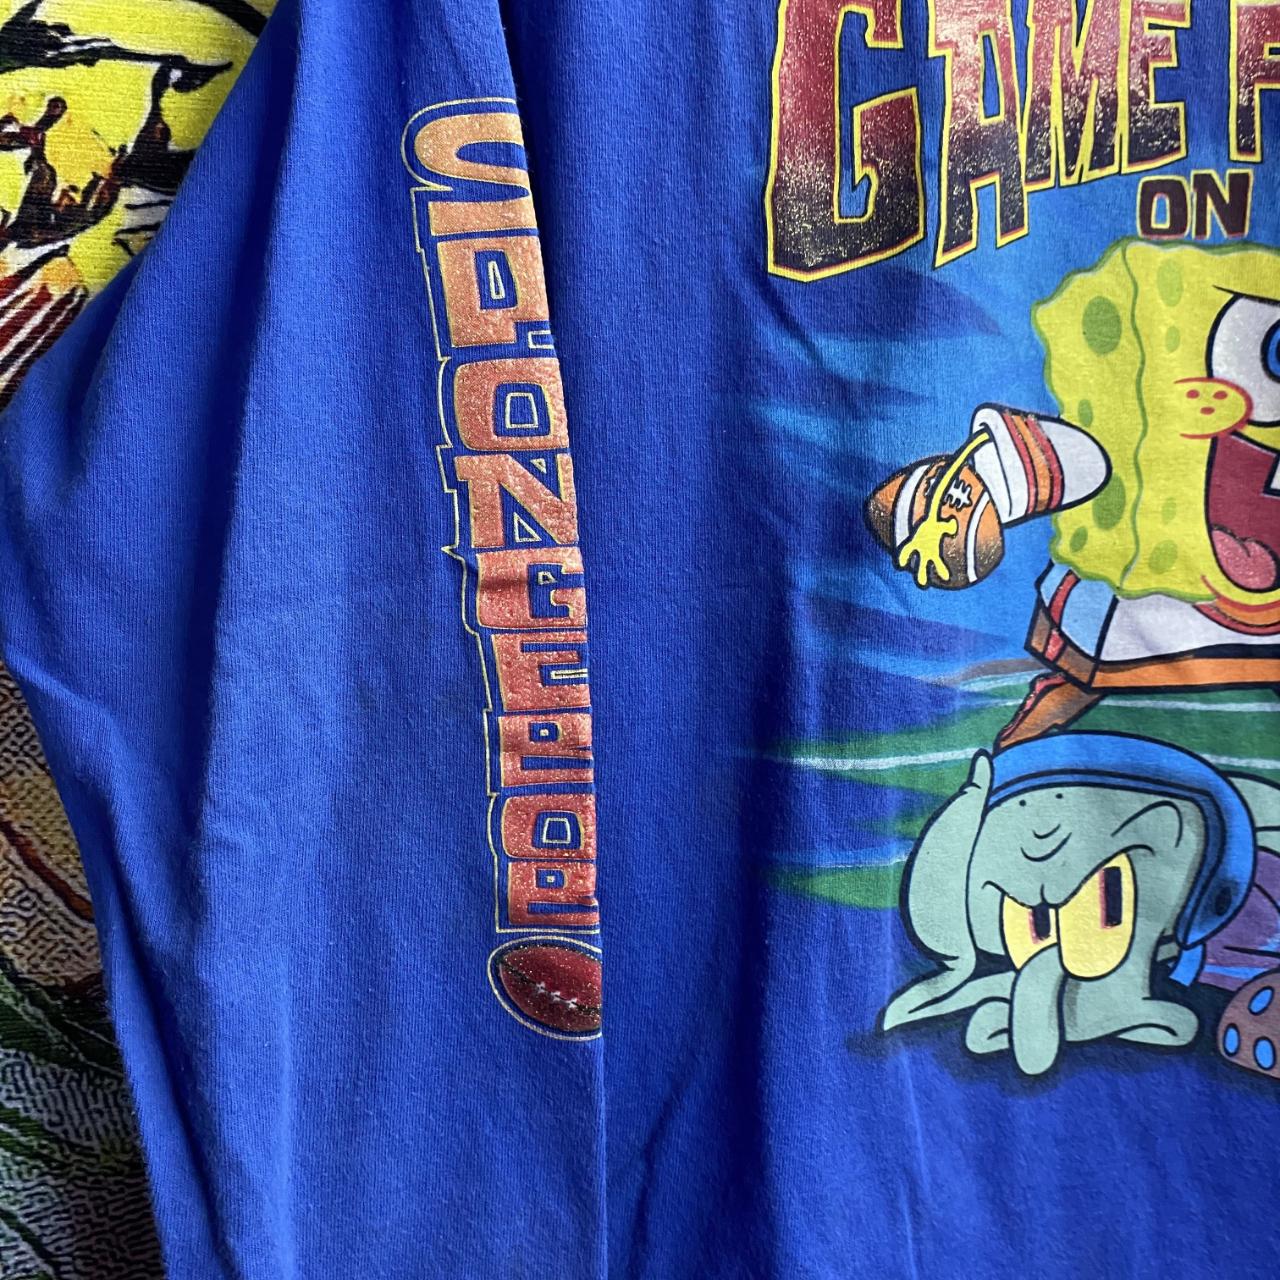 Sponge Bob Nickelodeon 2003 T-Shirt The Many Faces - Depop